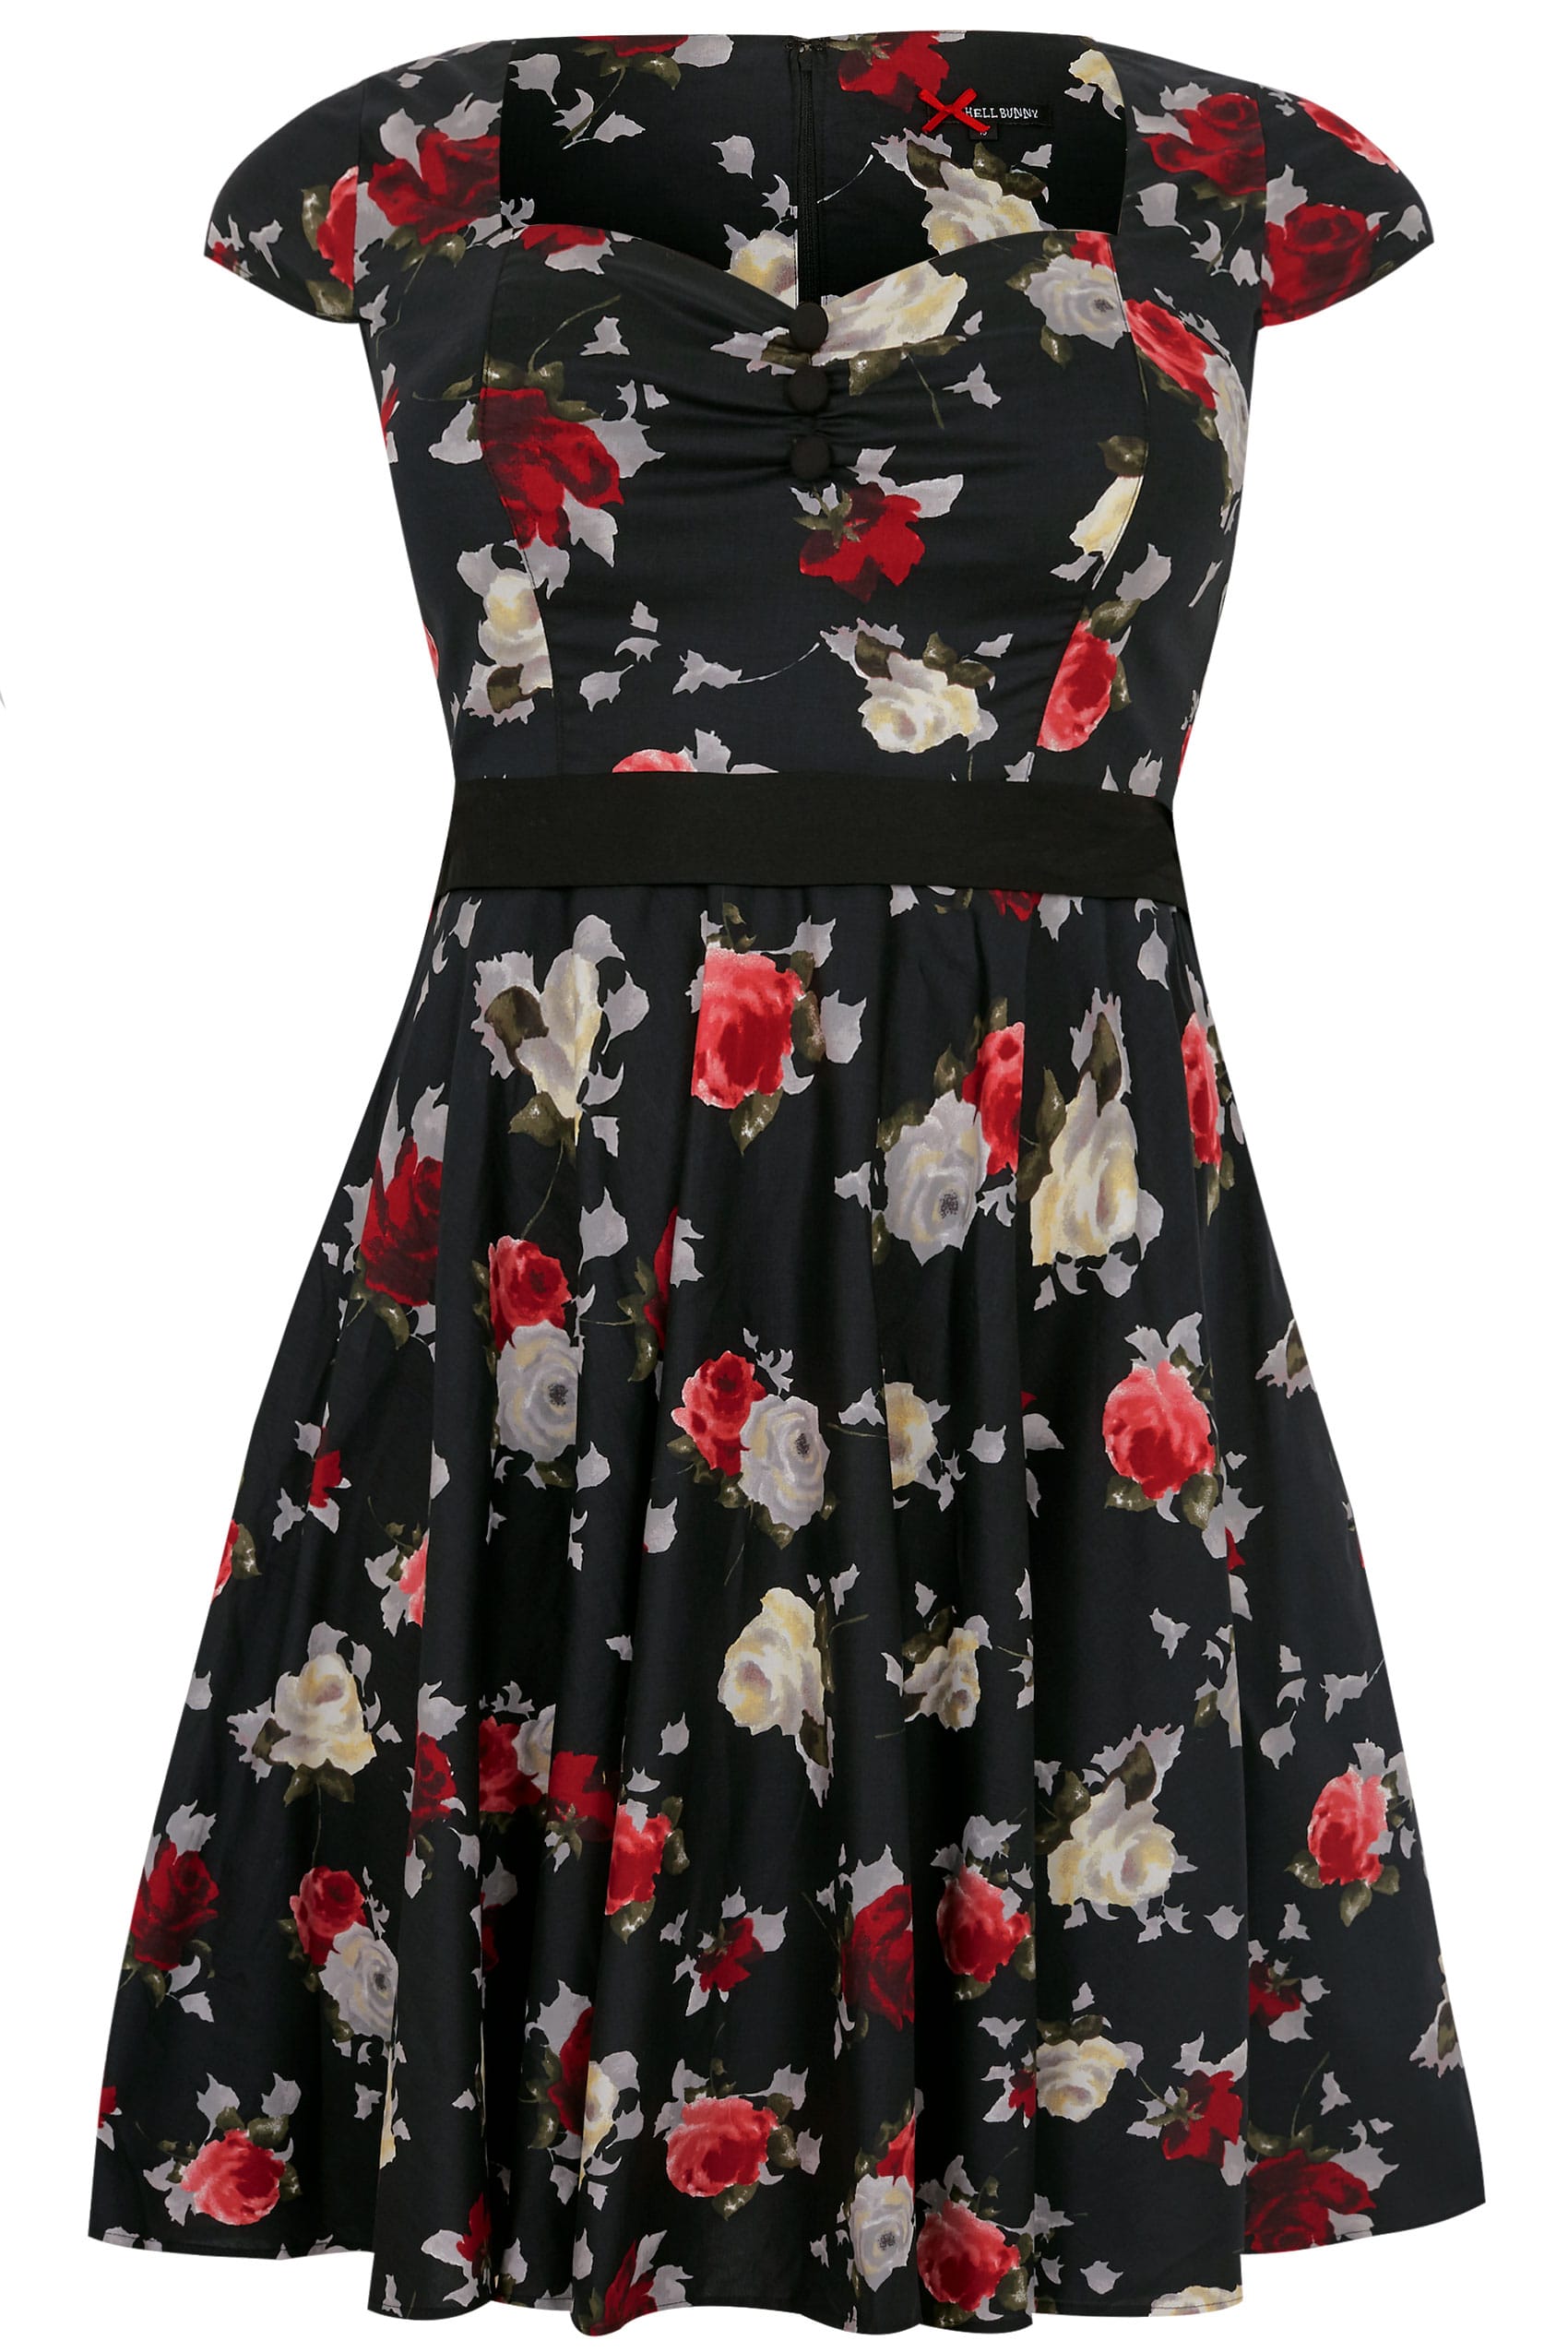 HELL BUNNY Black & Multi Floral Print Arabella Dress, Plus size 16 to 36